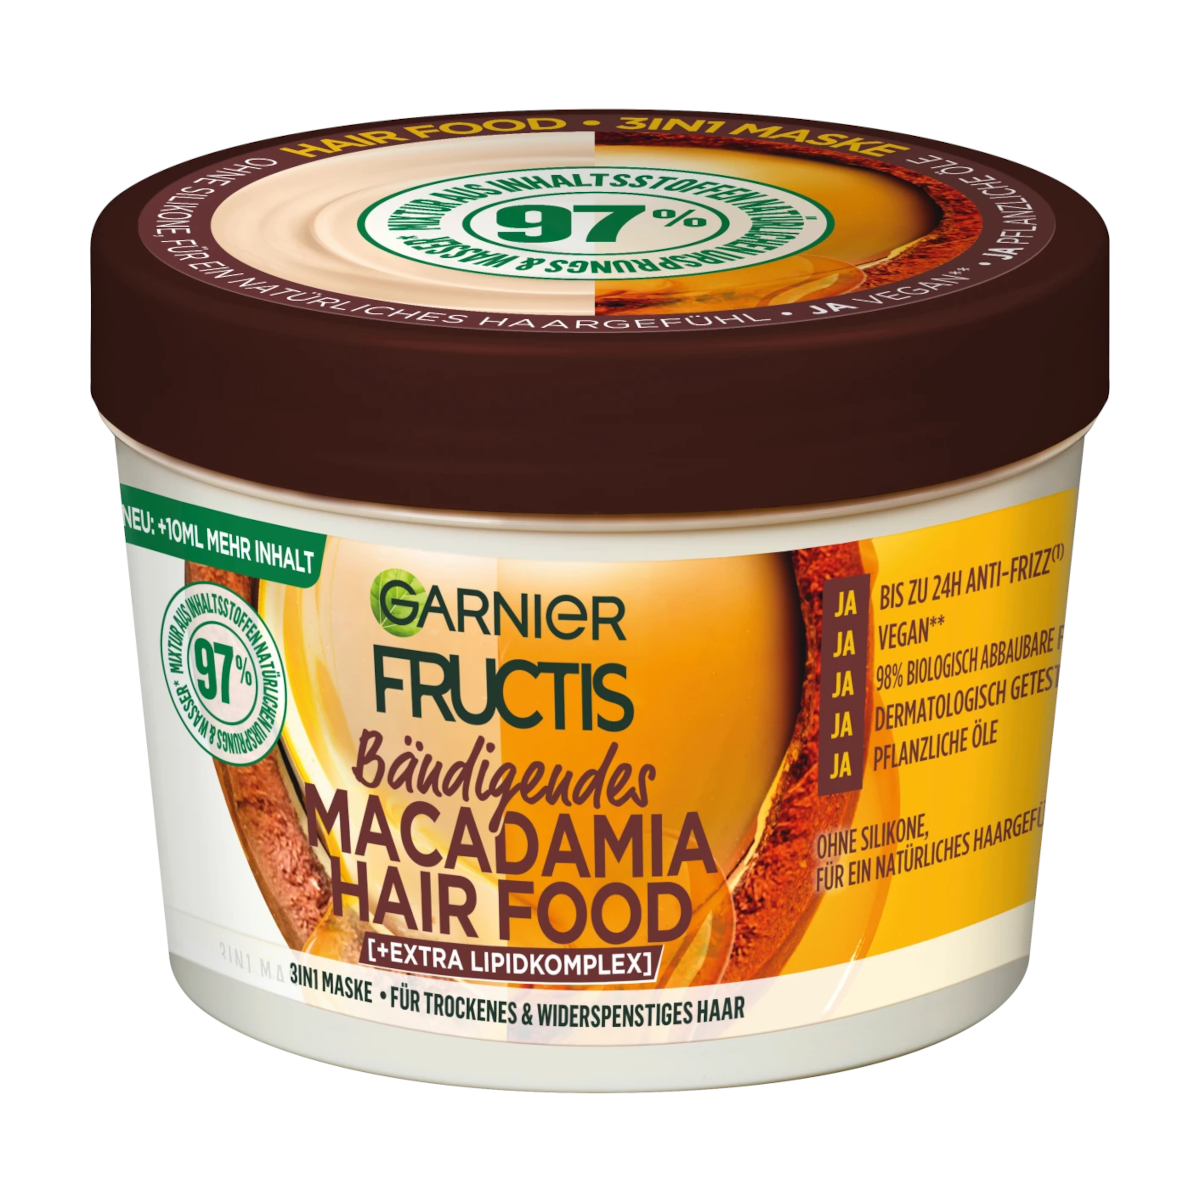 Garnier Fructis Haarkur Macadamia Hair Food 3in1 Maske, 400 ml